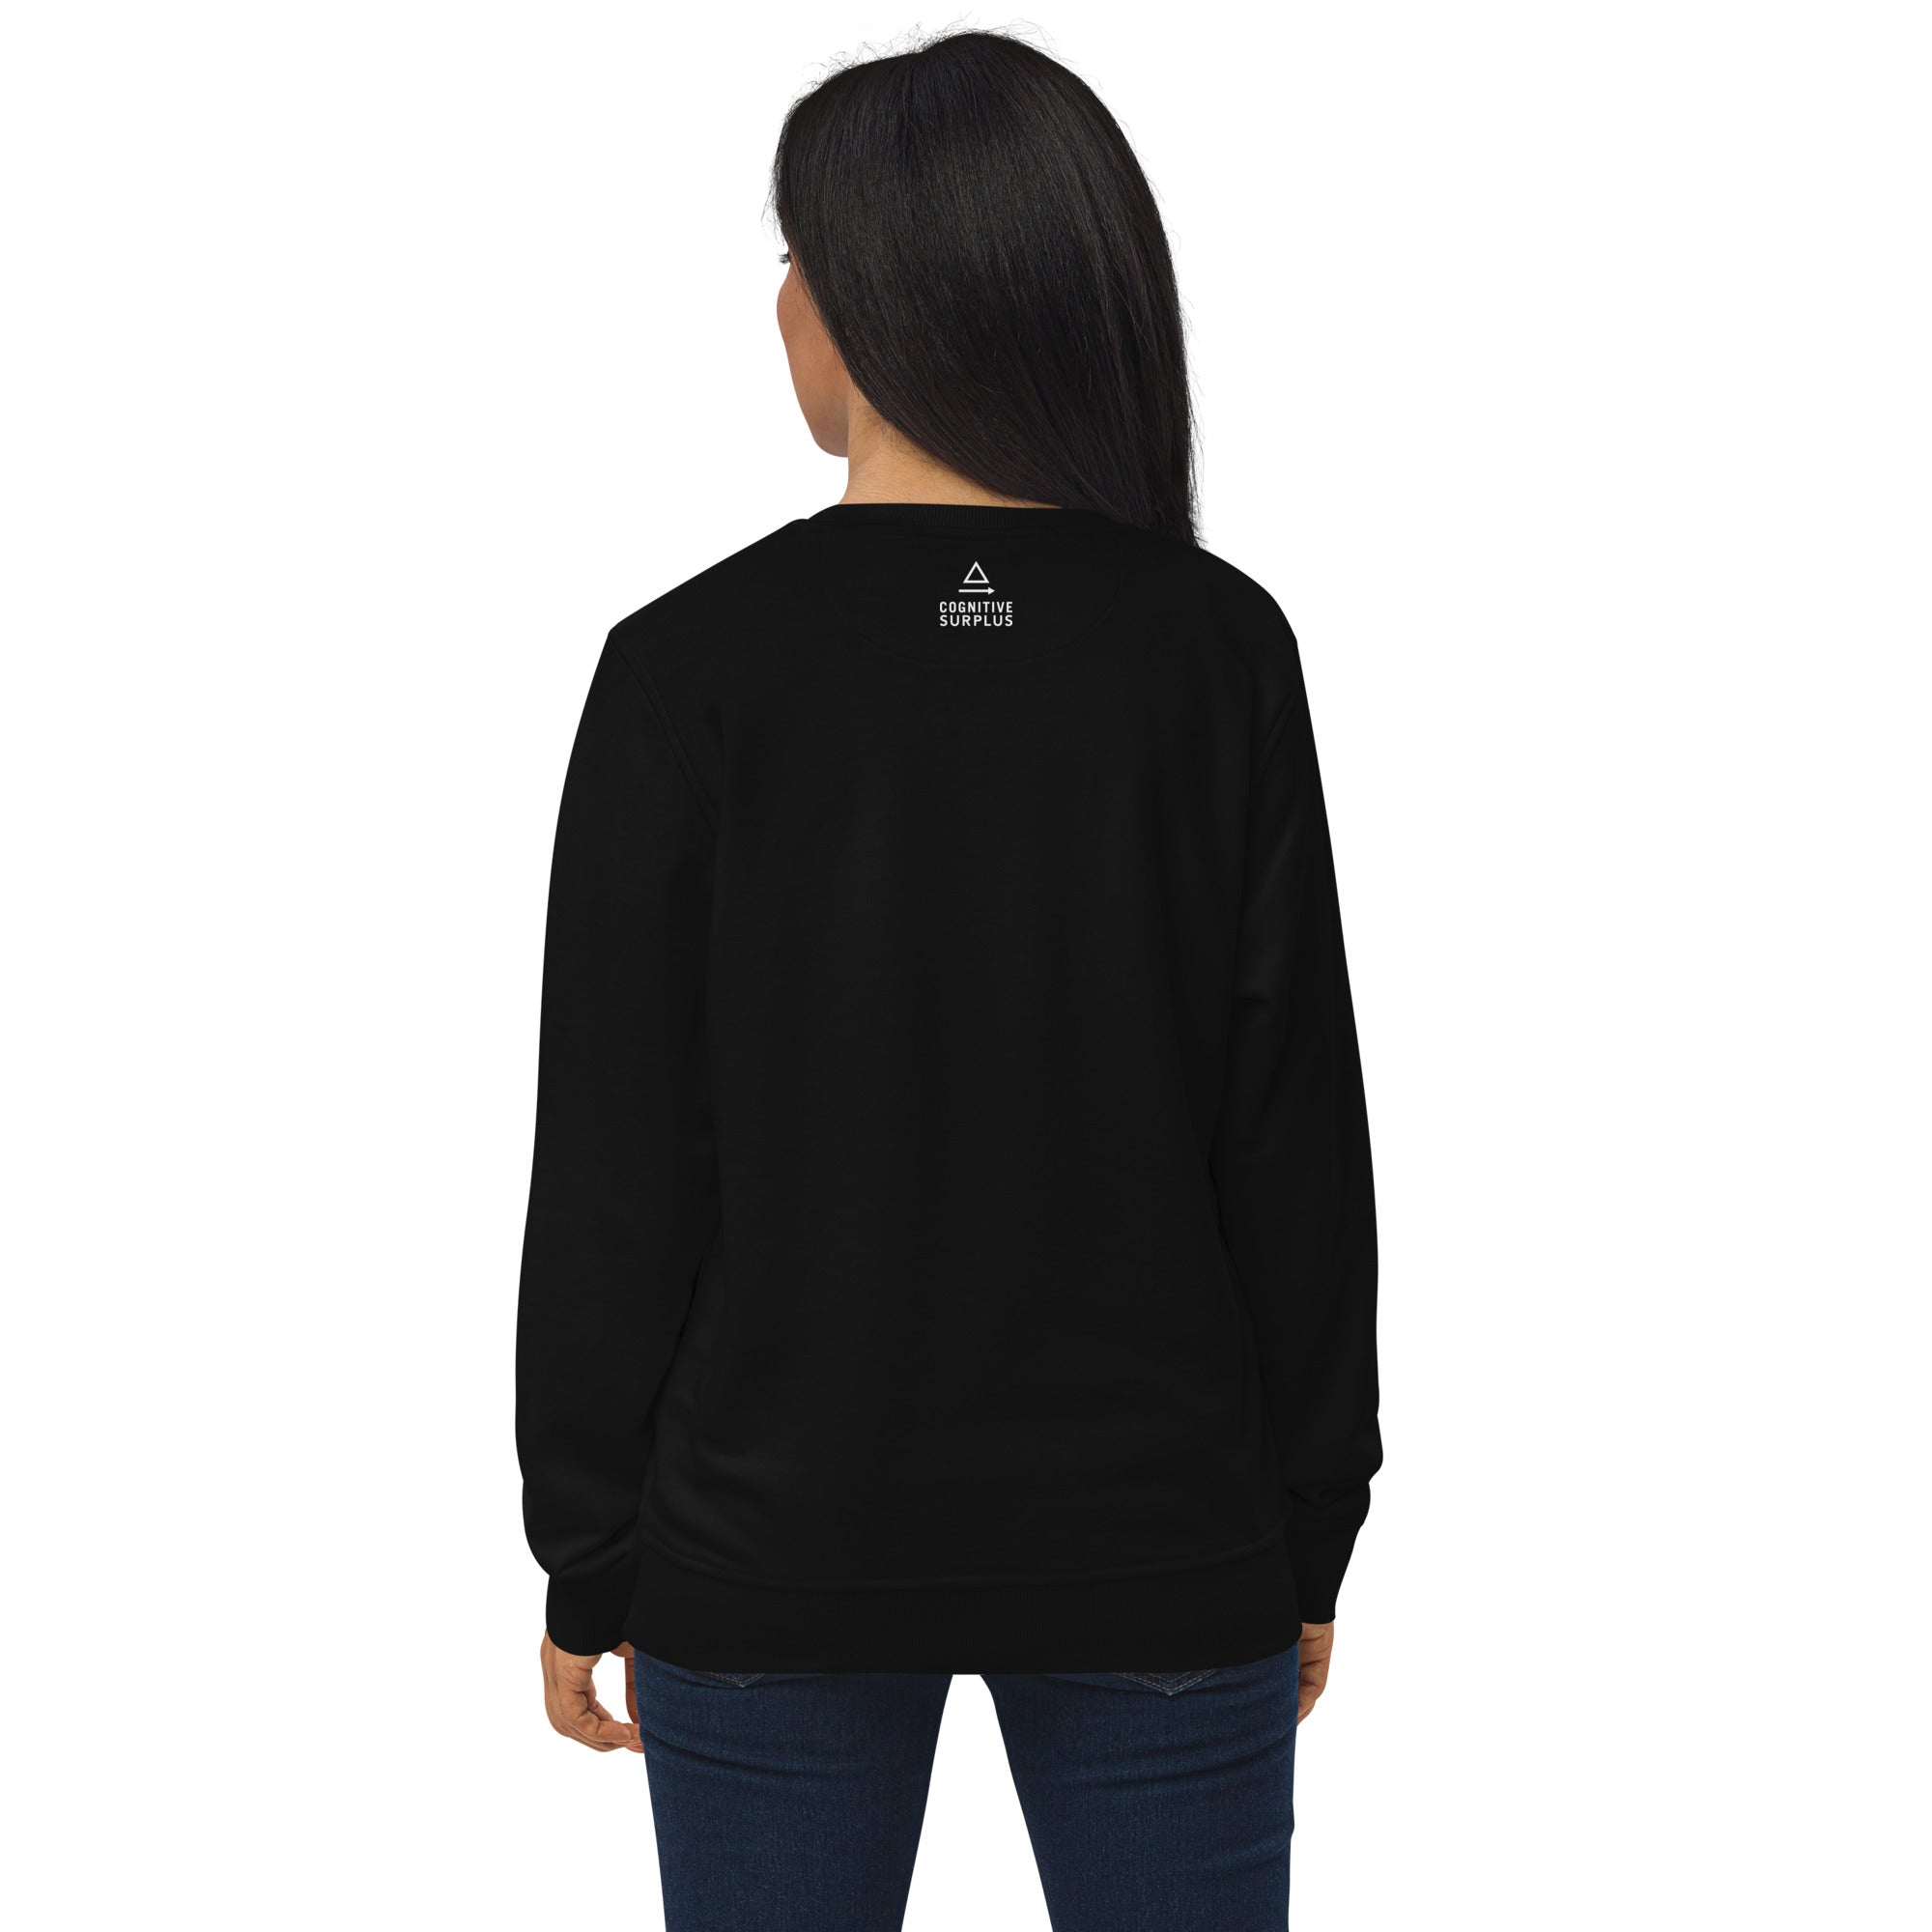 unisex-organic-sweatshirt-black-back-6570c13335dec.jpg